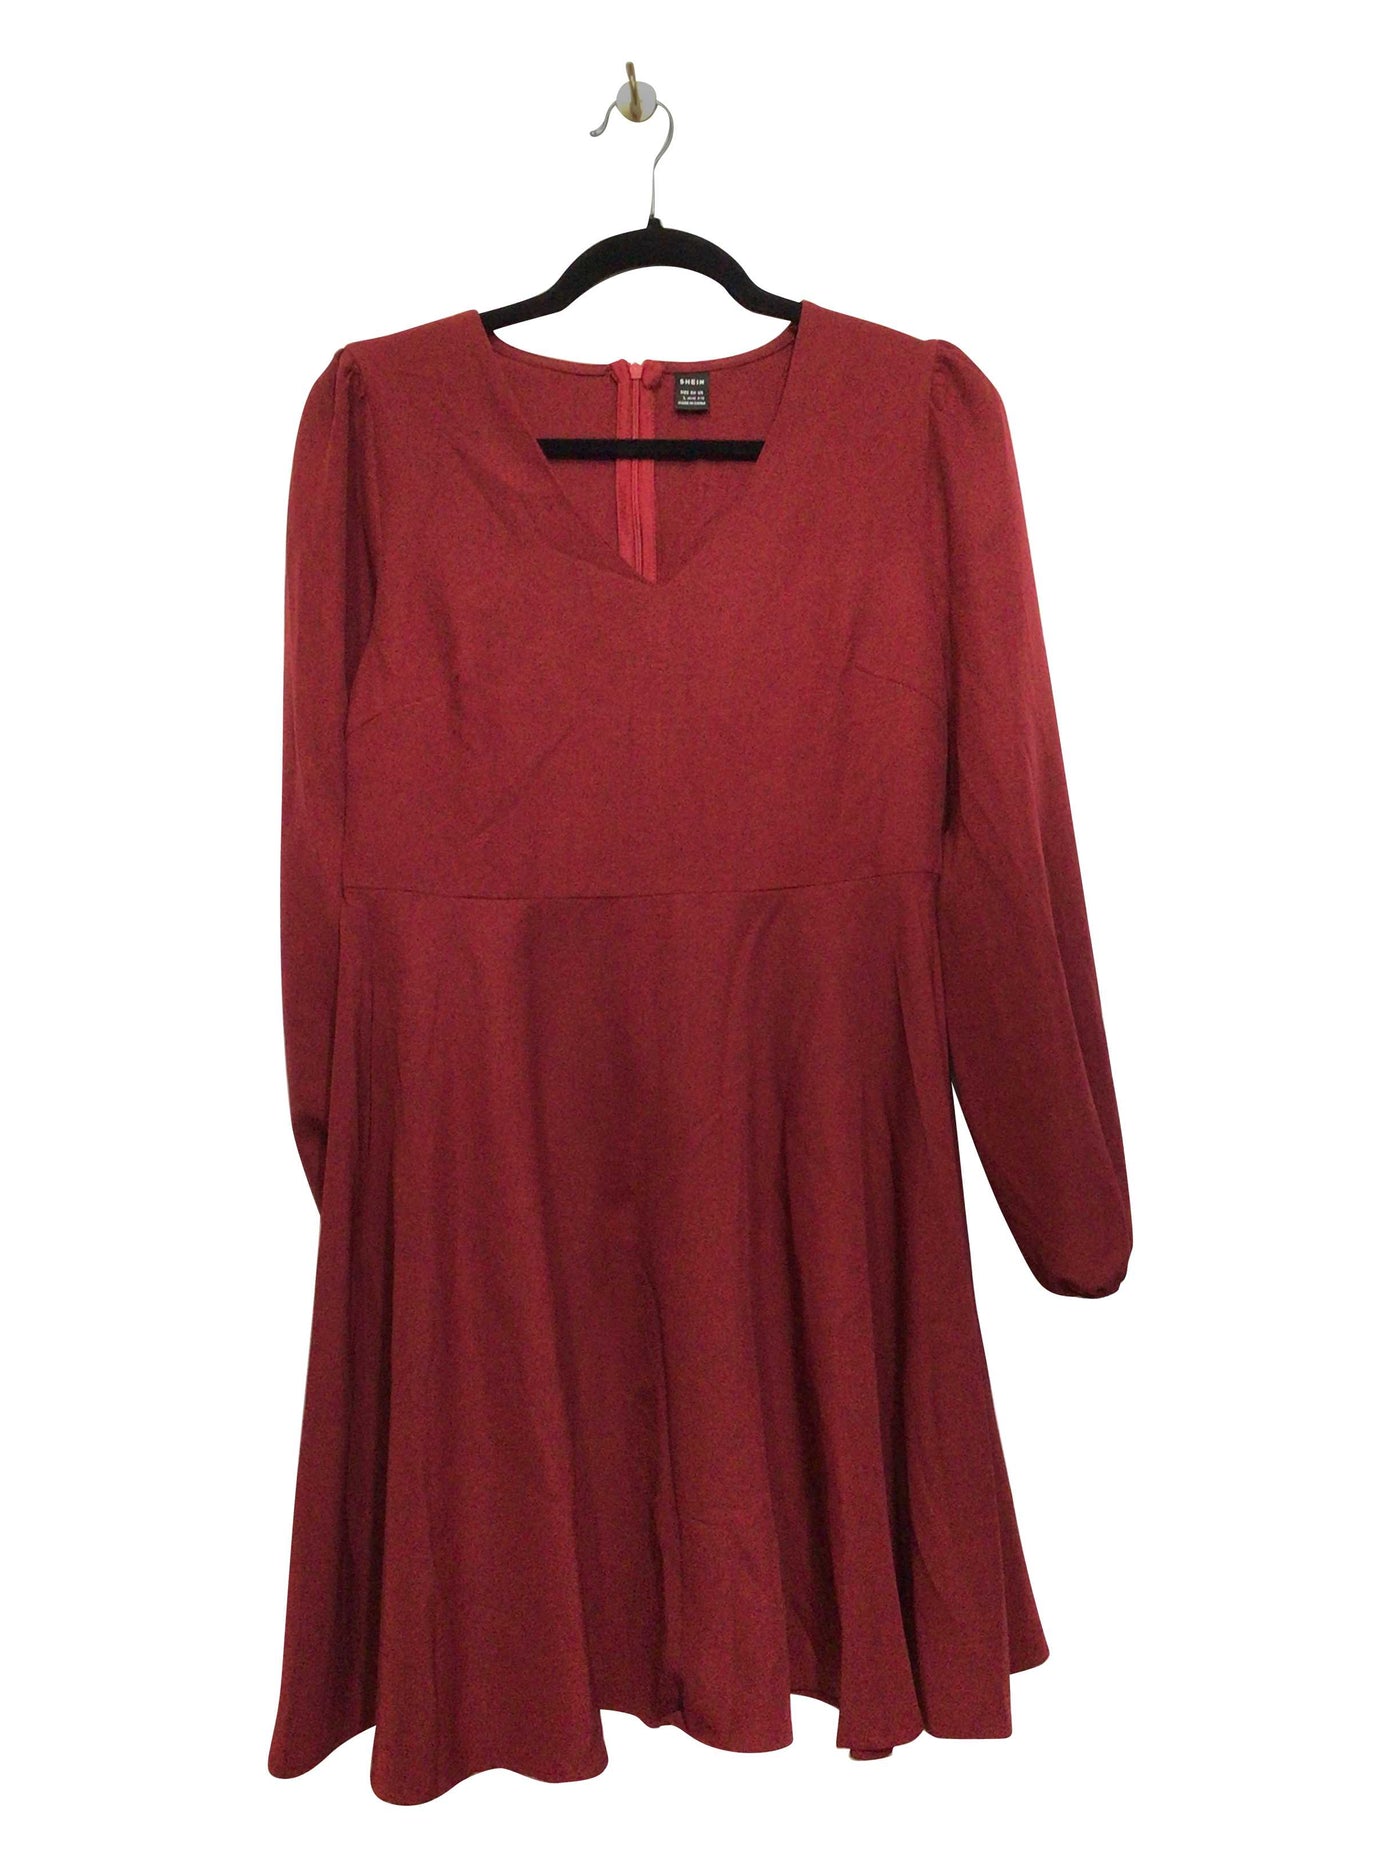 SHEIN Regular fit Shift Dress in Red  -  8/10  7.99 Koop